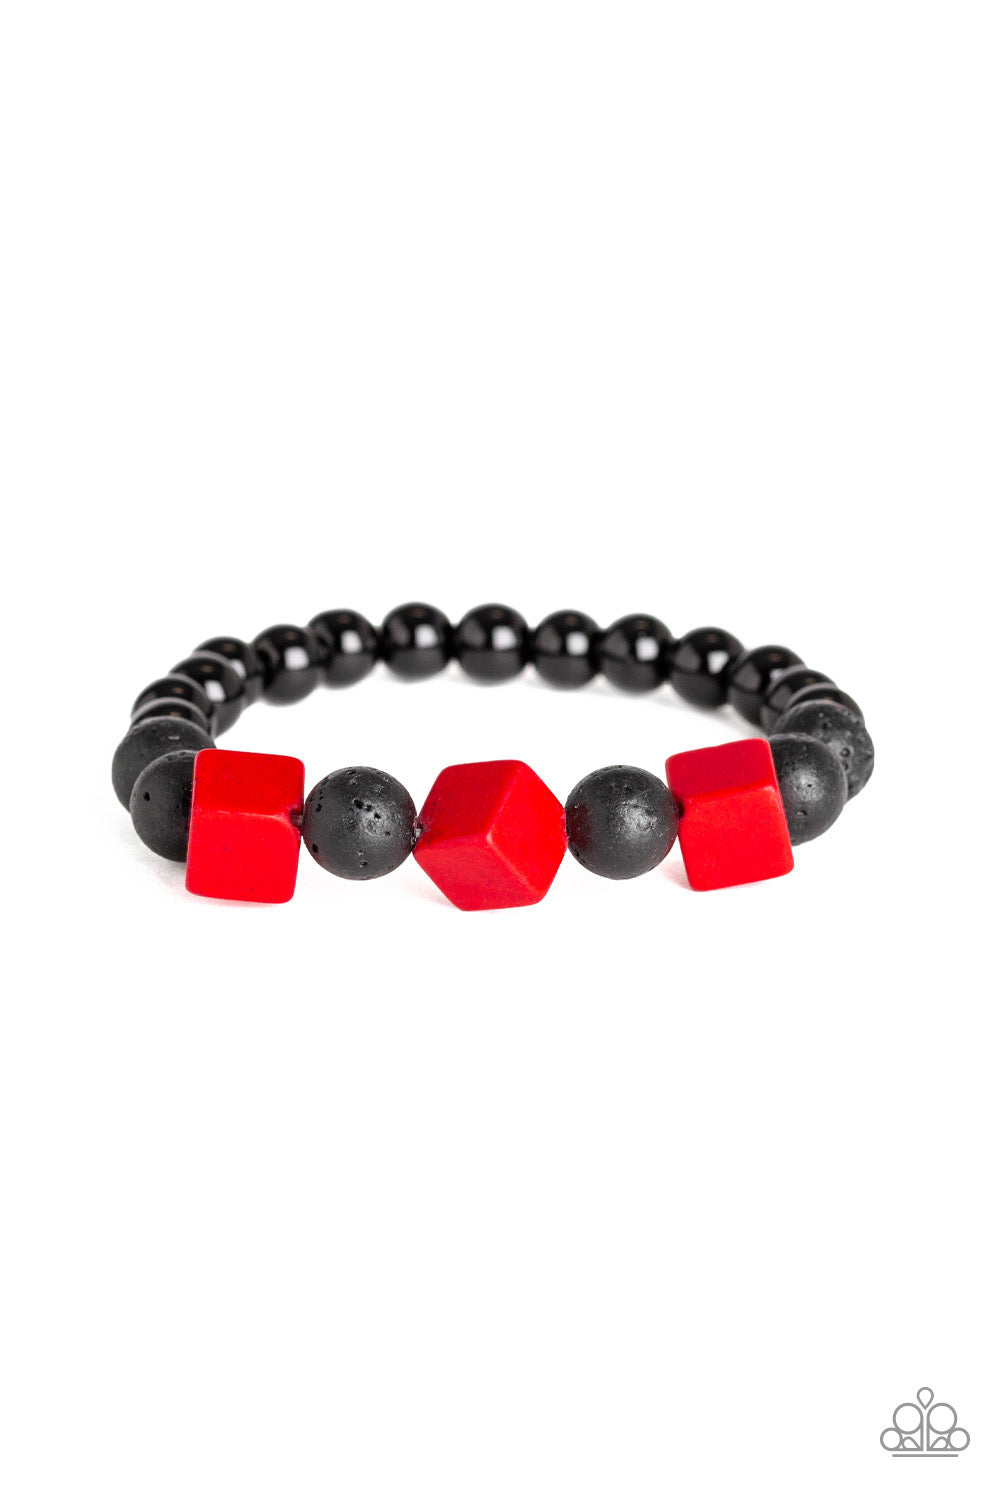 Purpose Bracelet - Red